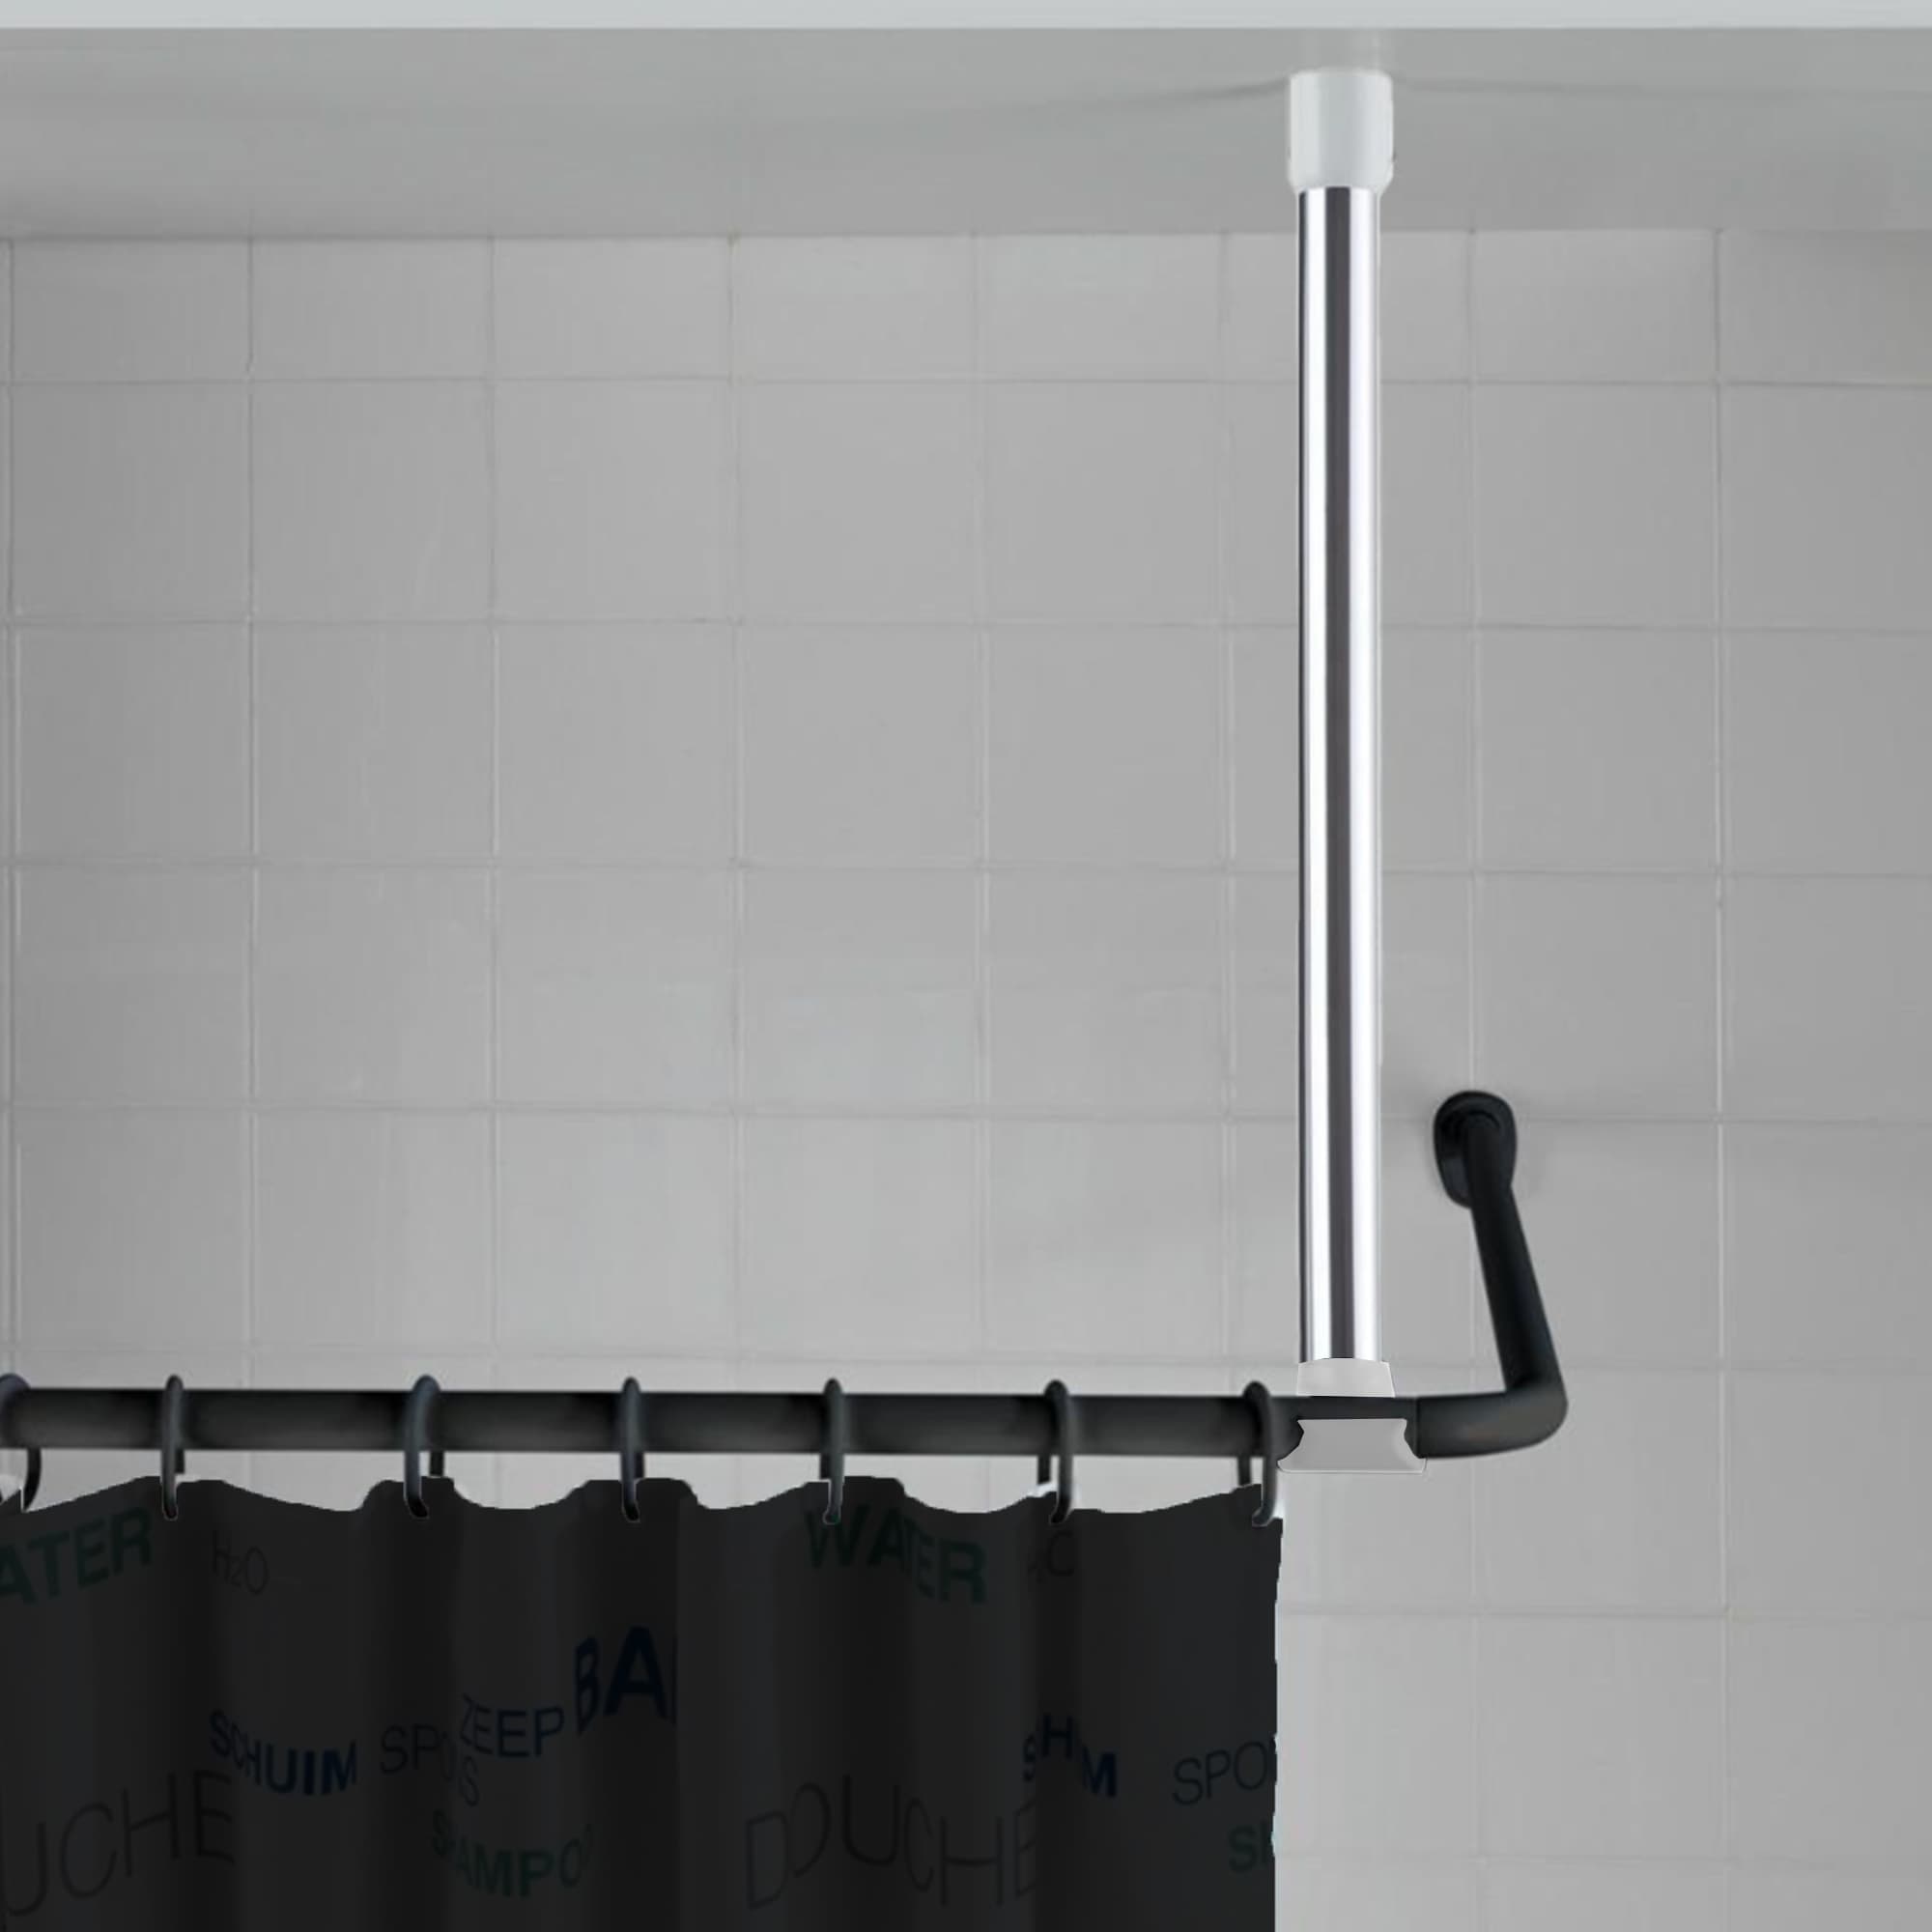 Adjustable Ceiling Curtain Rod - Mount Support for Bathtub or Shower Curtain Rod - Chrome